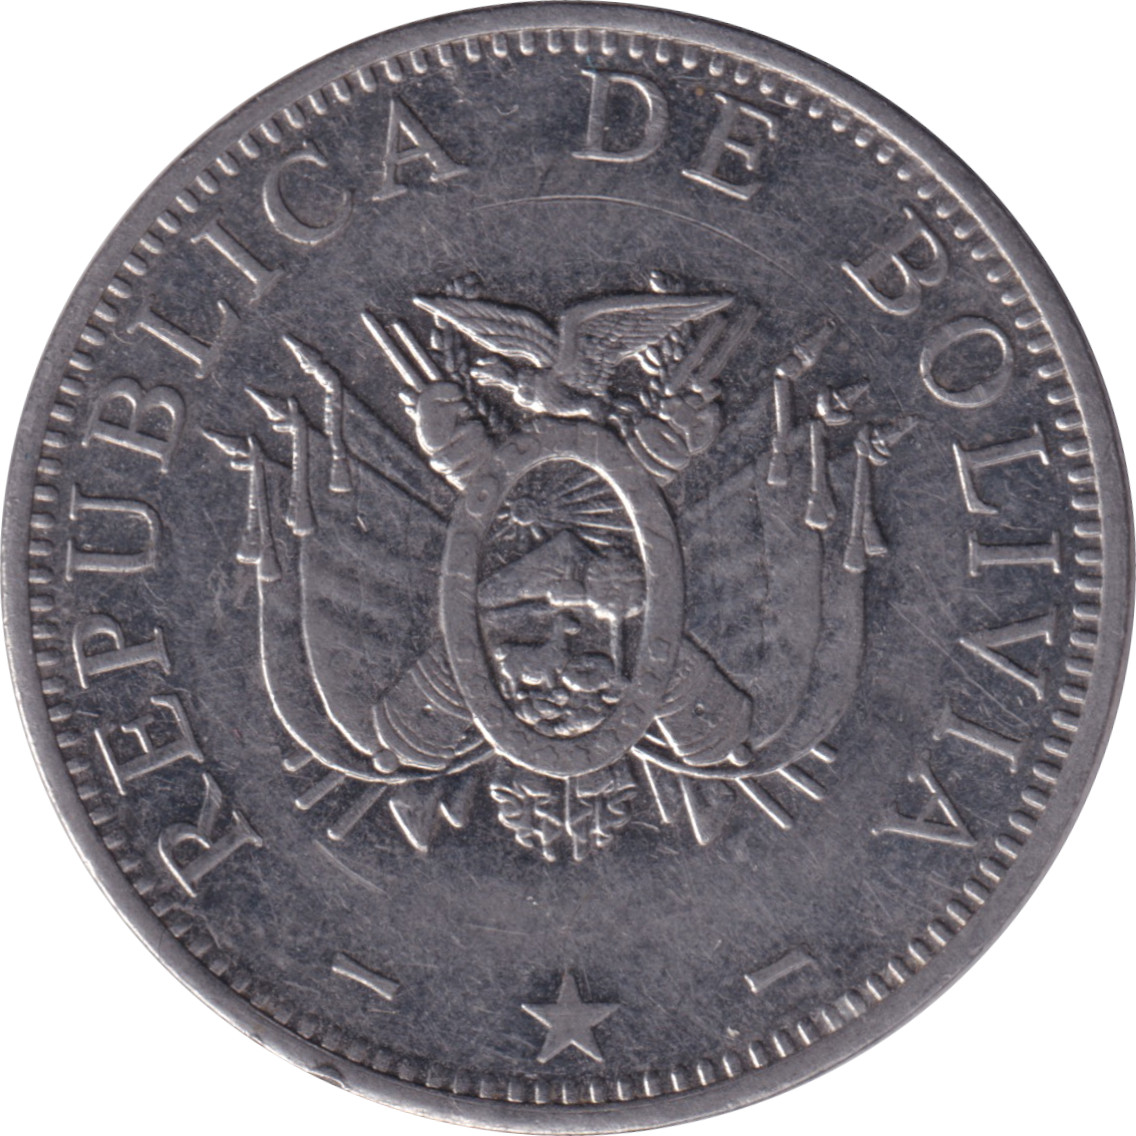 50 centavos - République de Bolivie